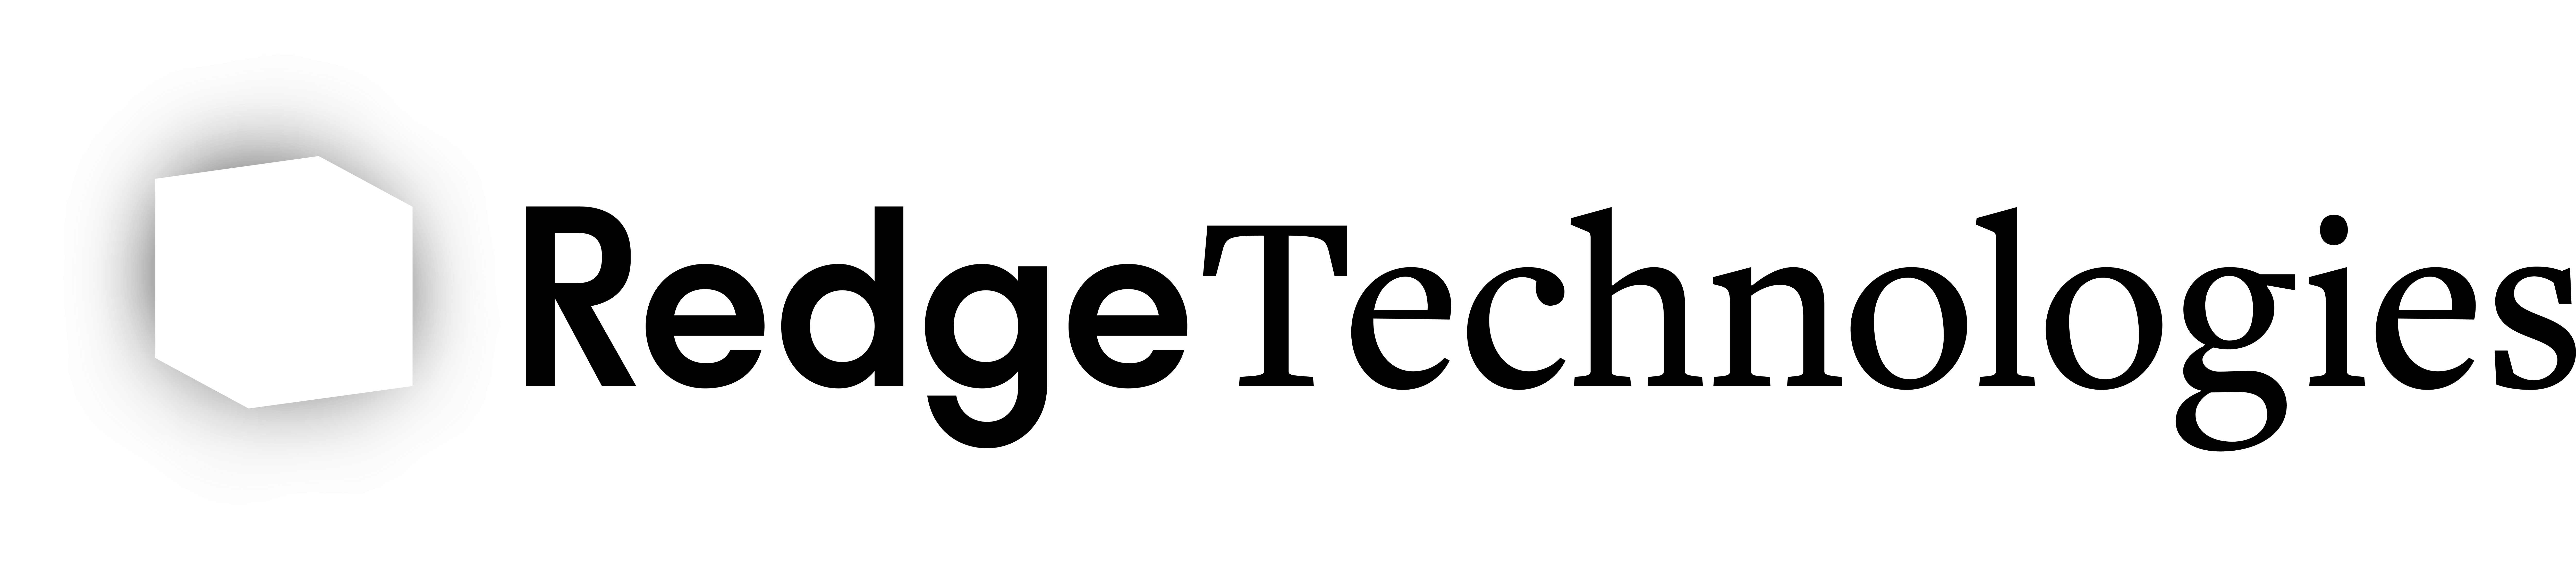 Redge Technologies logo